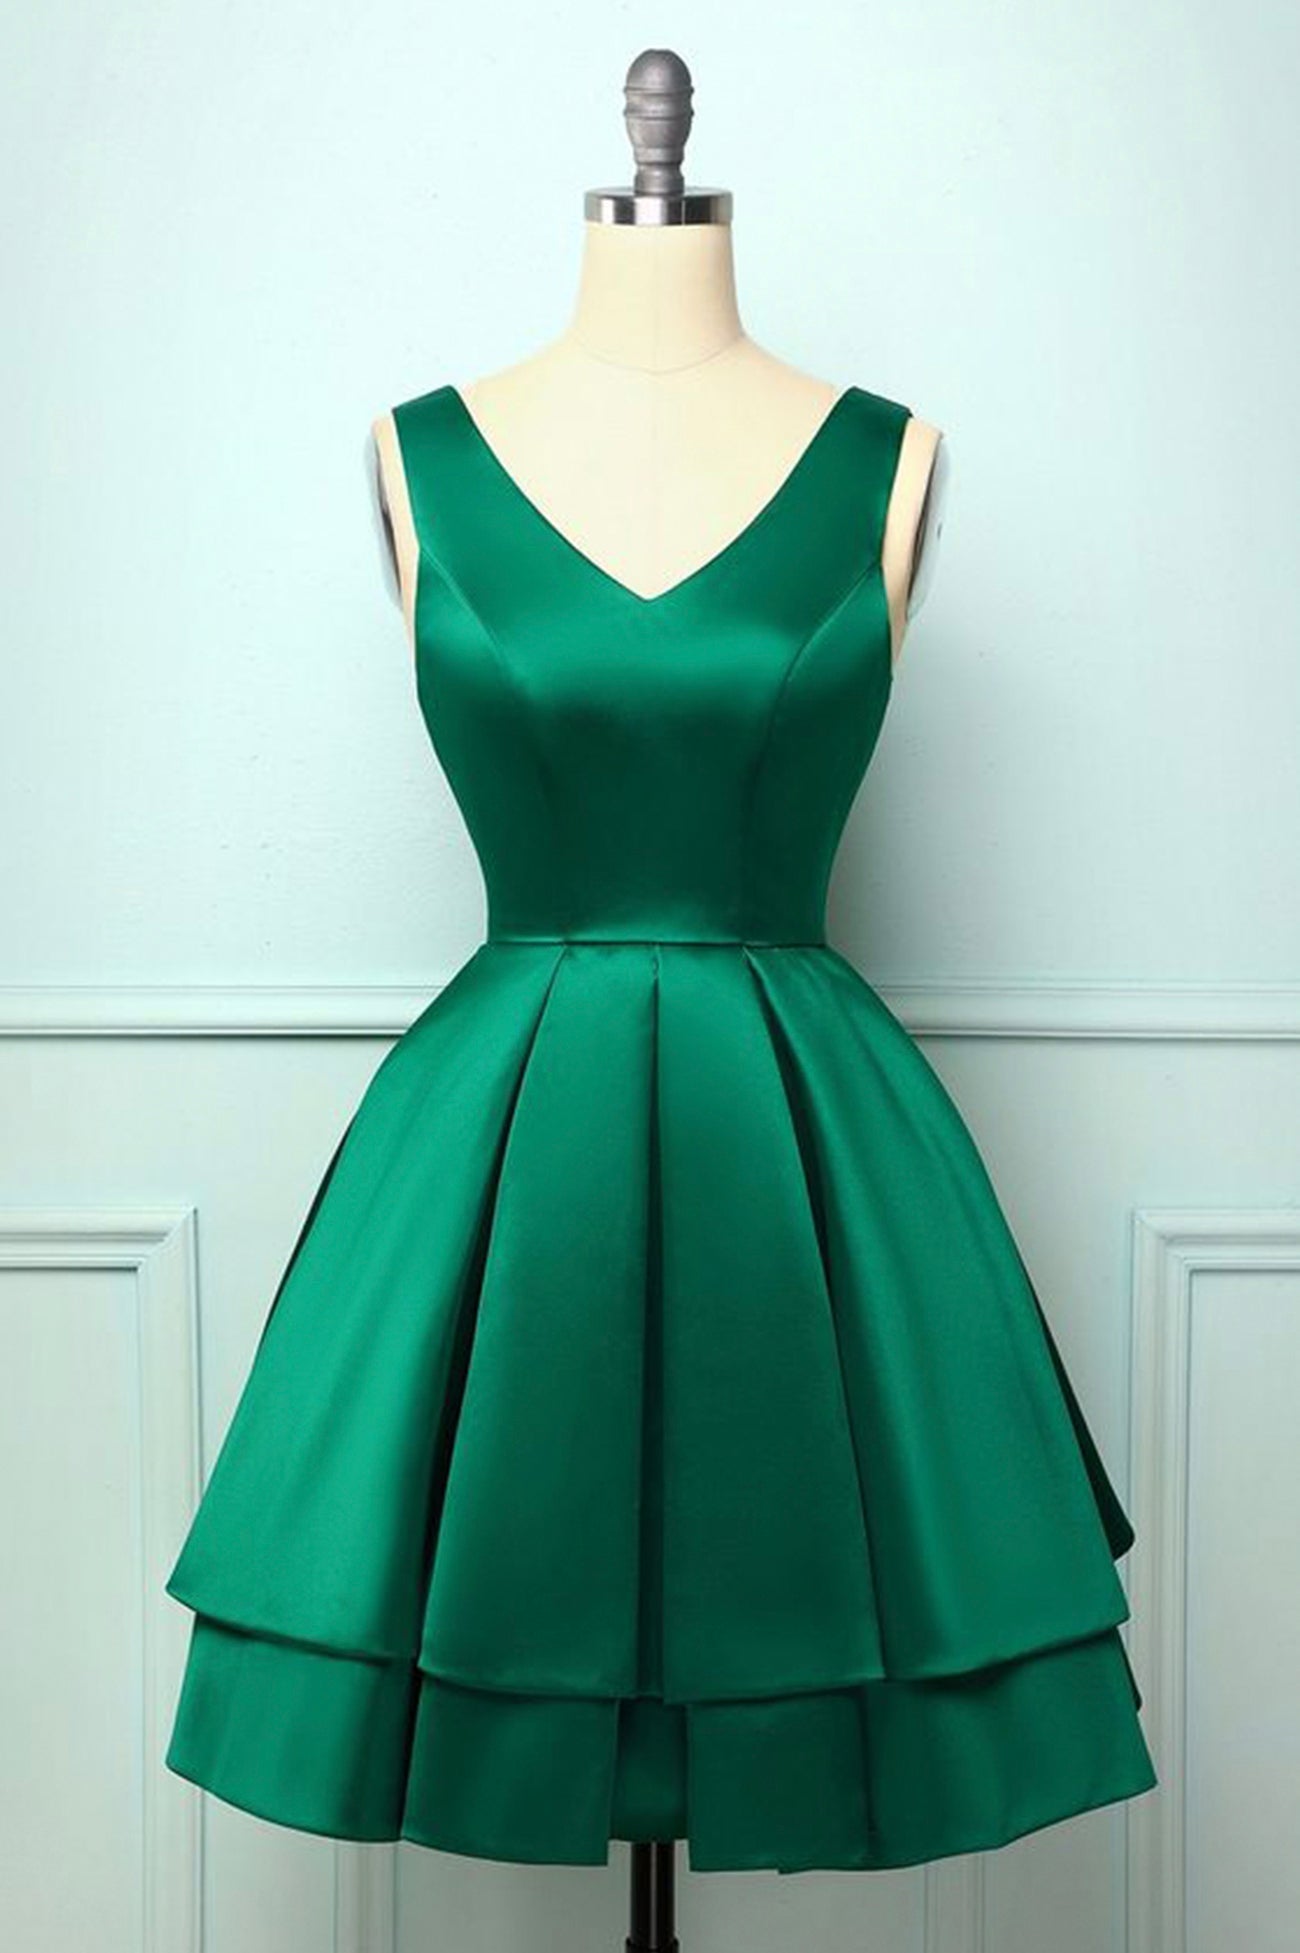 Quince Dress, Green Satin Short Prom Dresses, A-Line Homecoming Dresses